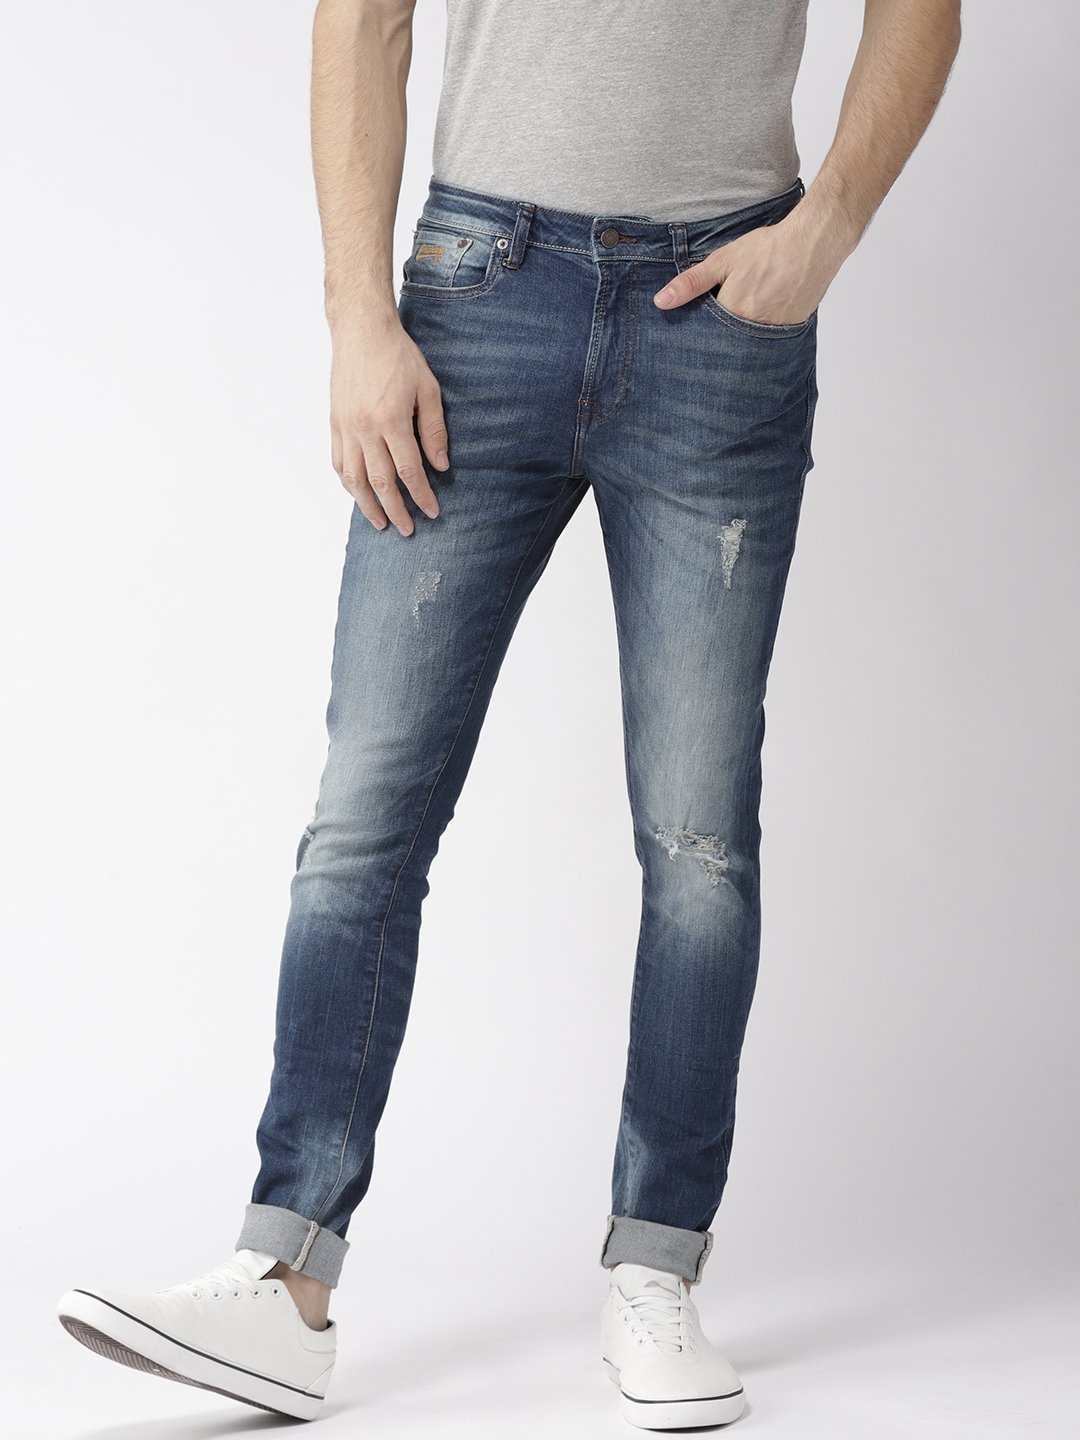 aeropostale skinny jeans mens